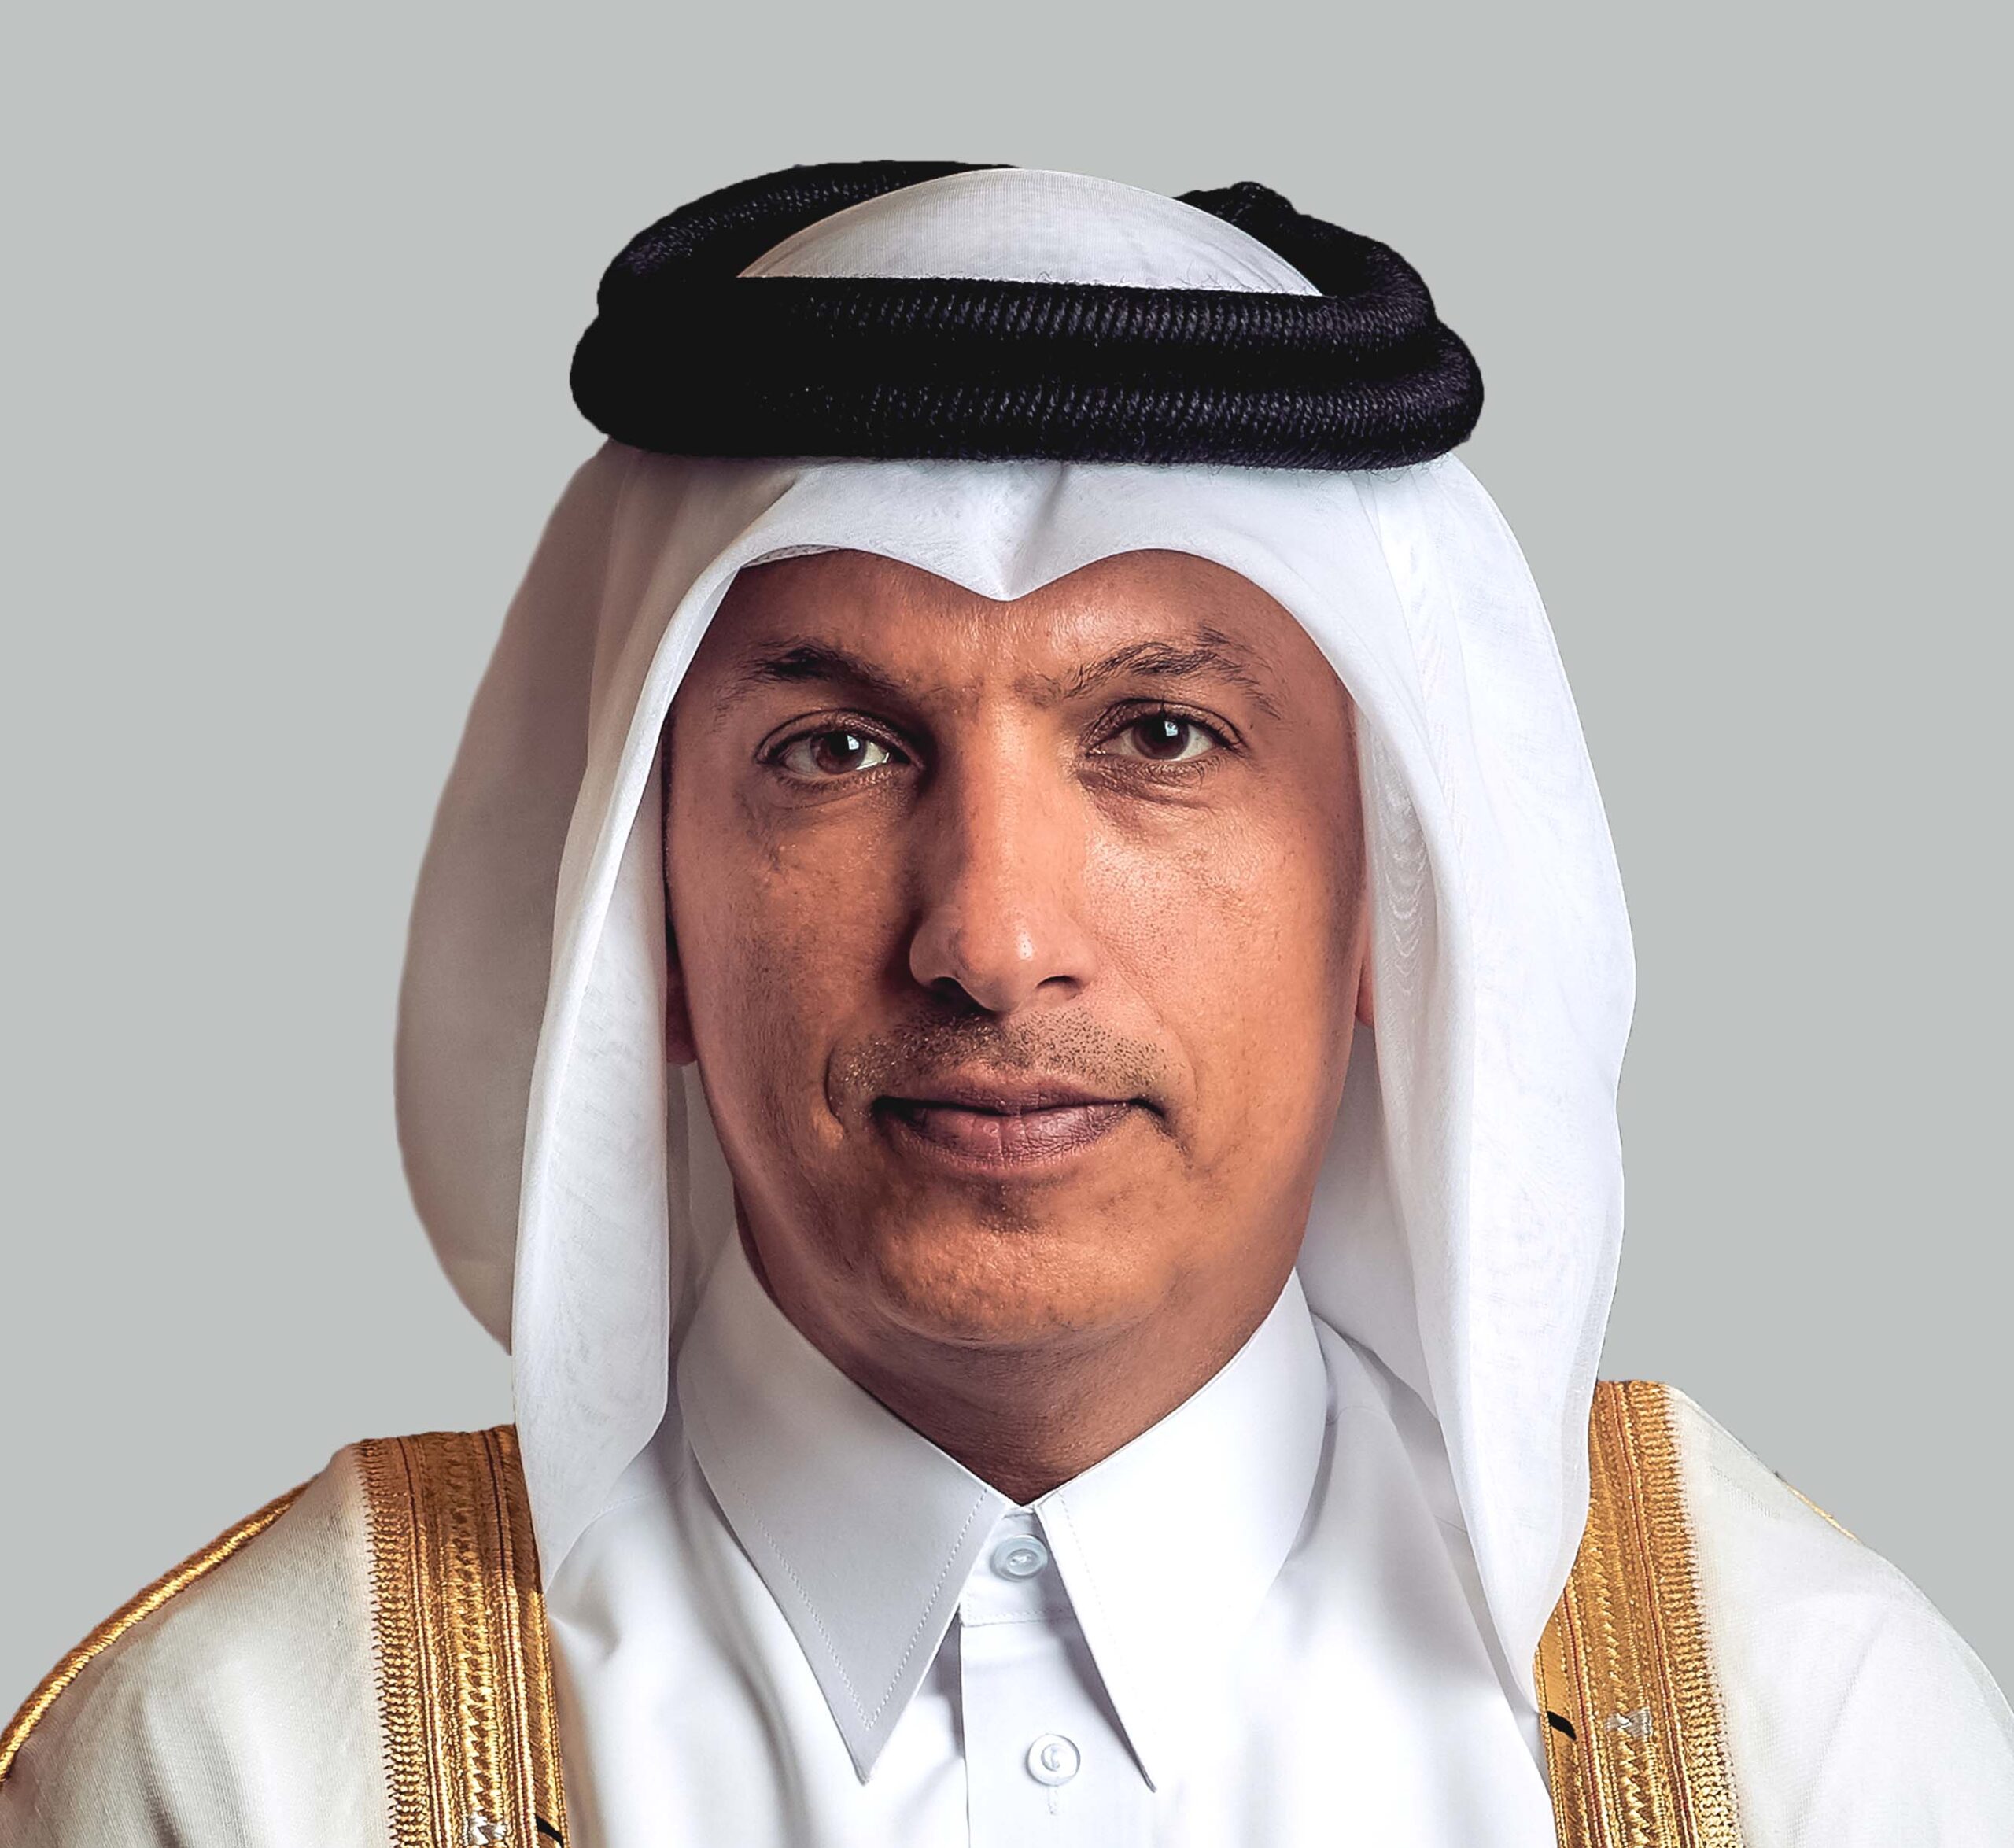 Qatar minister of finance